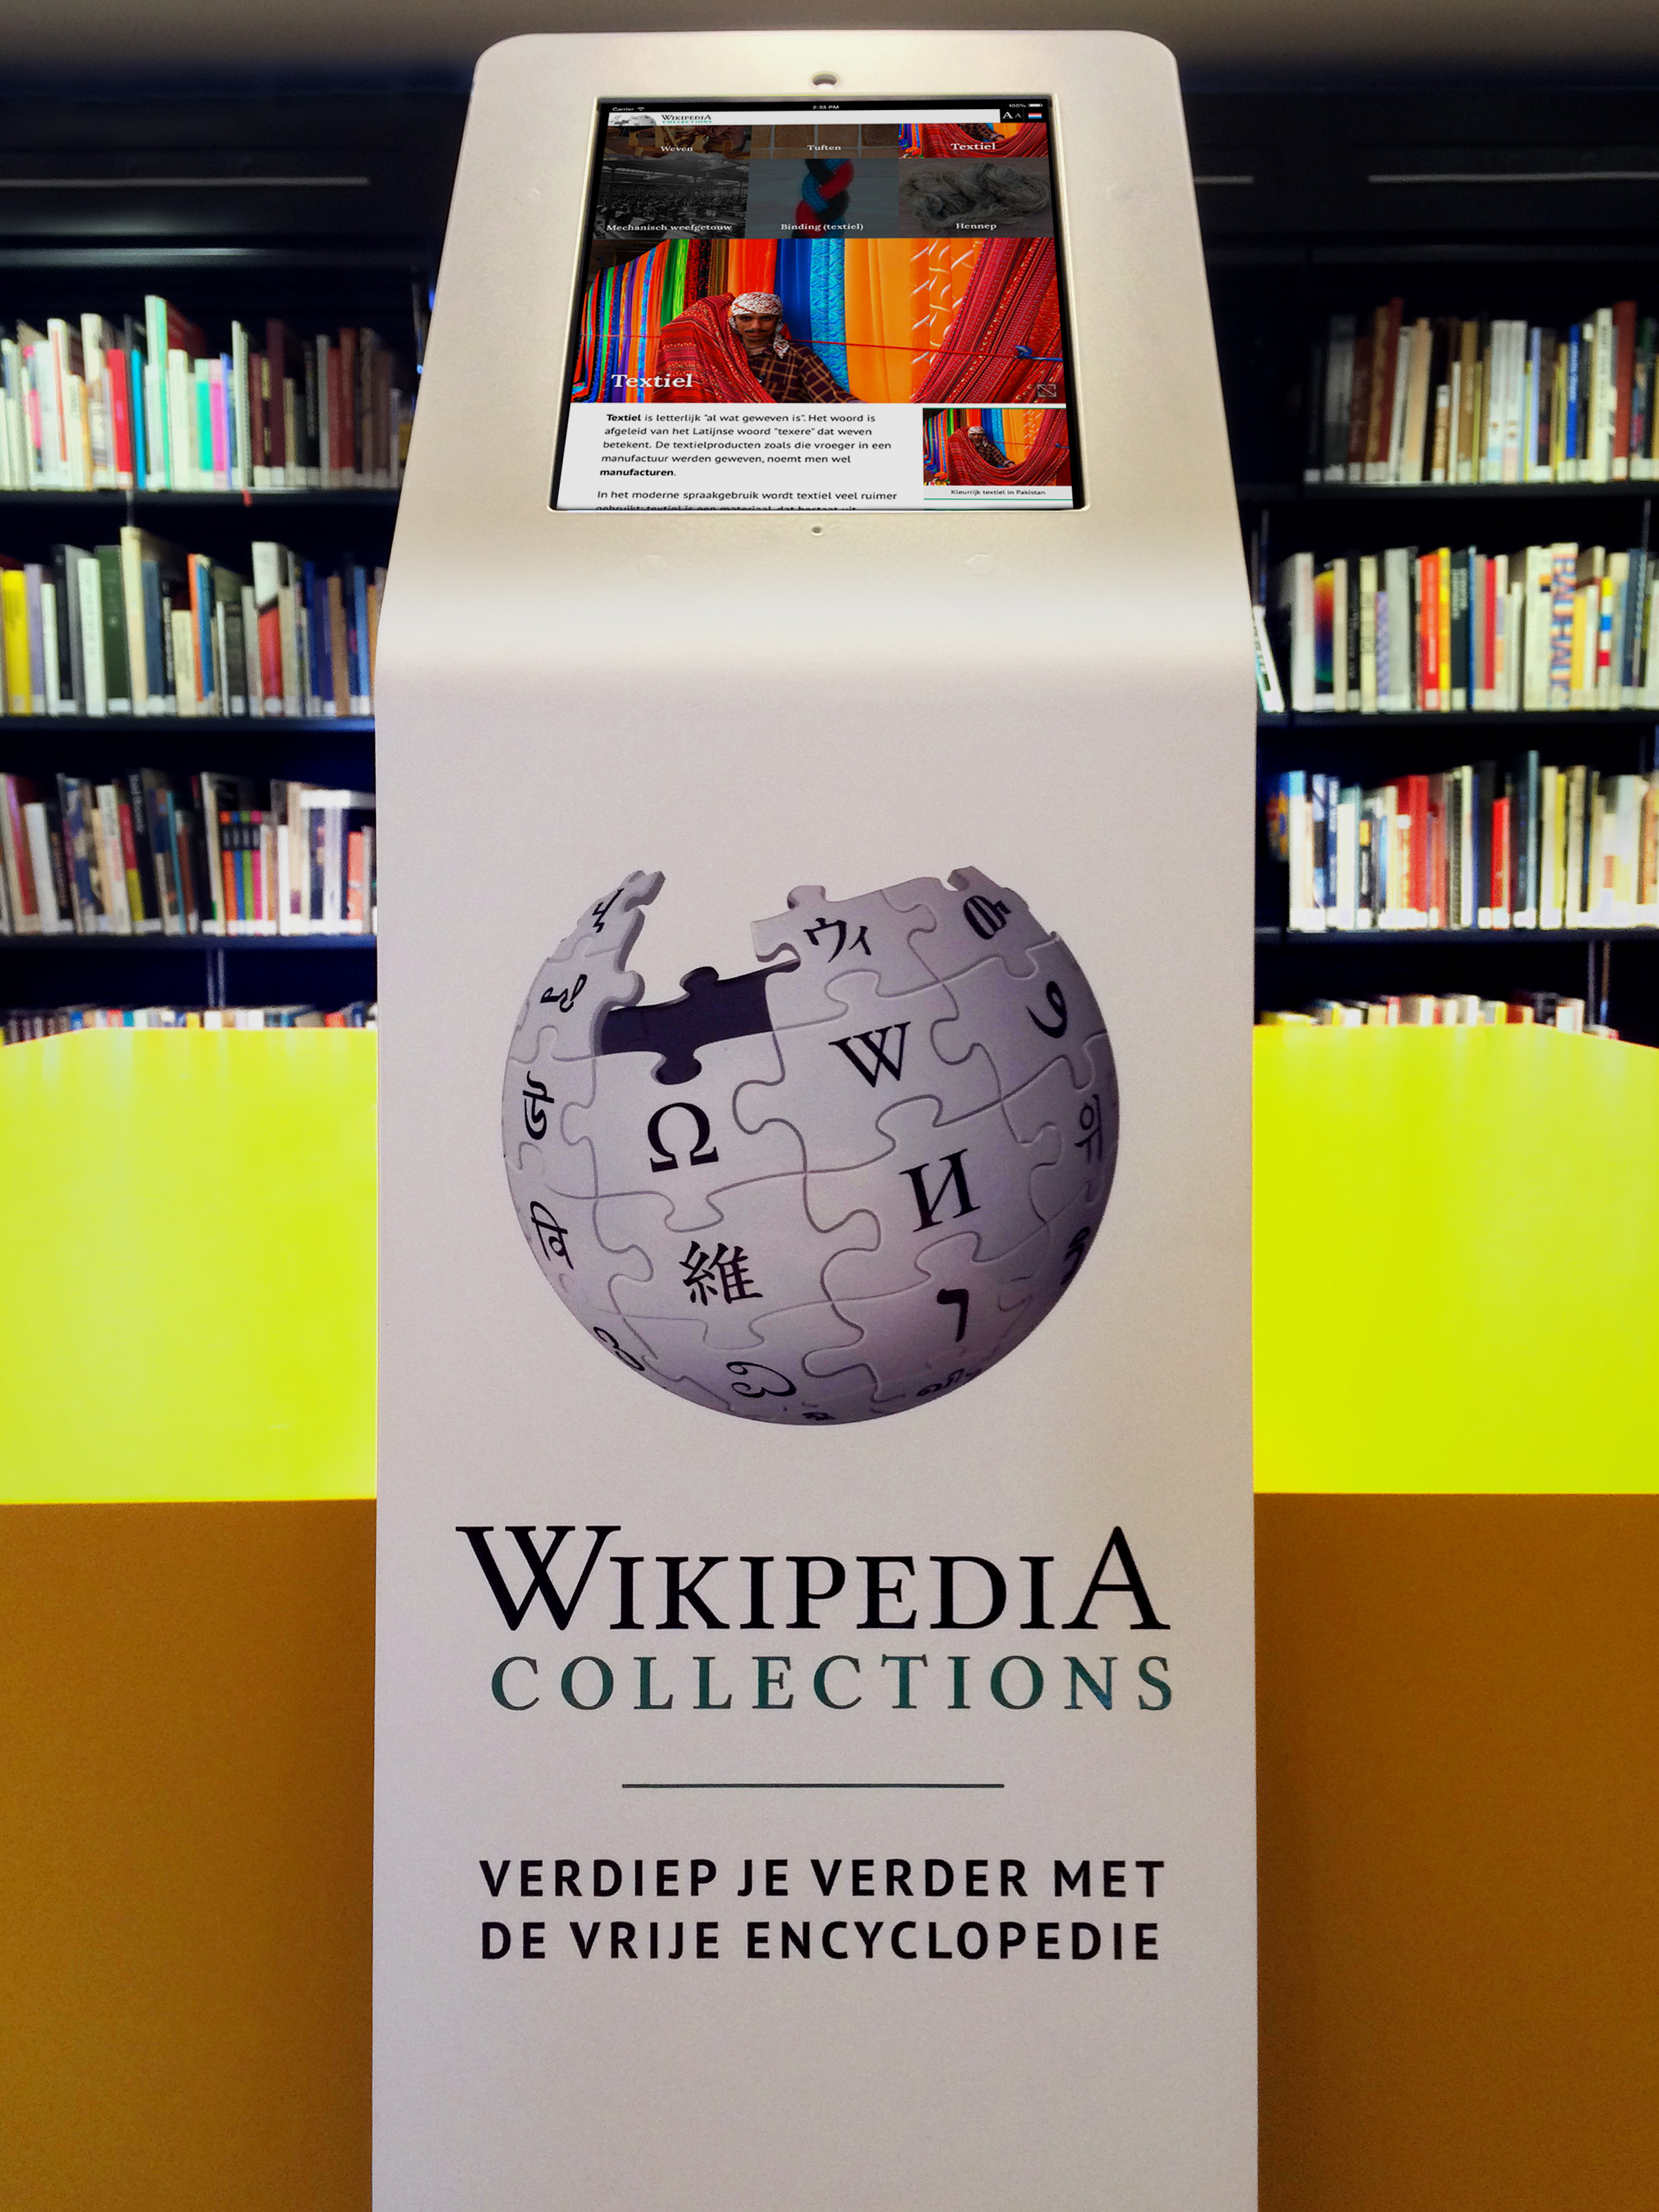 Wiki collection. Kioskcollection, интернет-магазин.